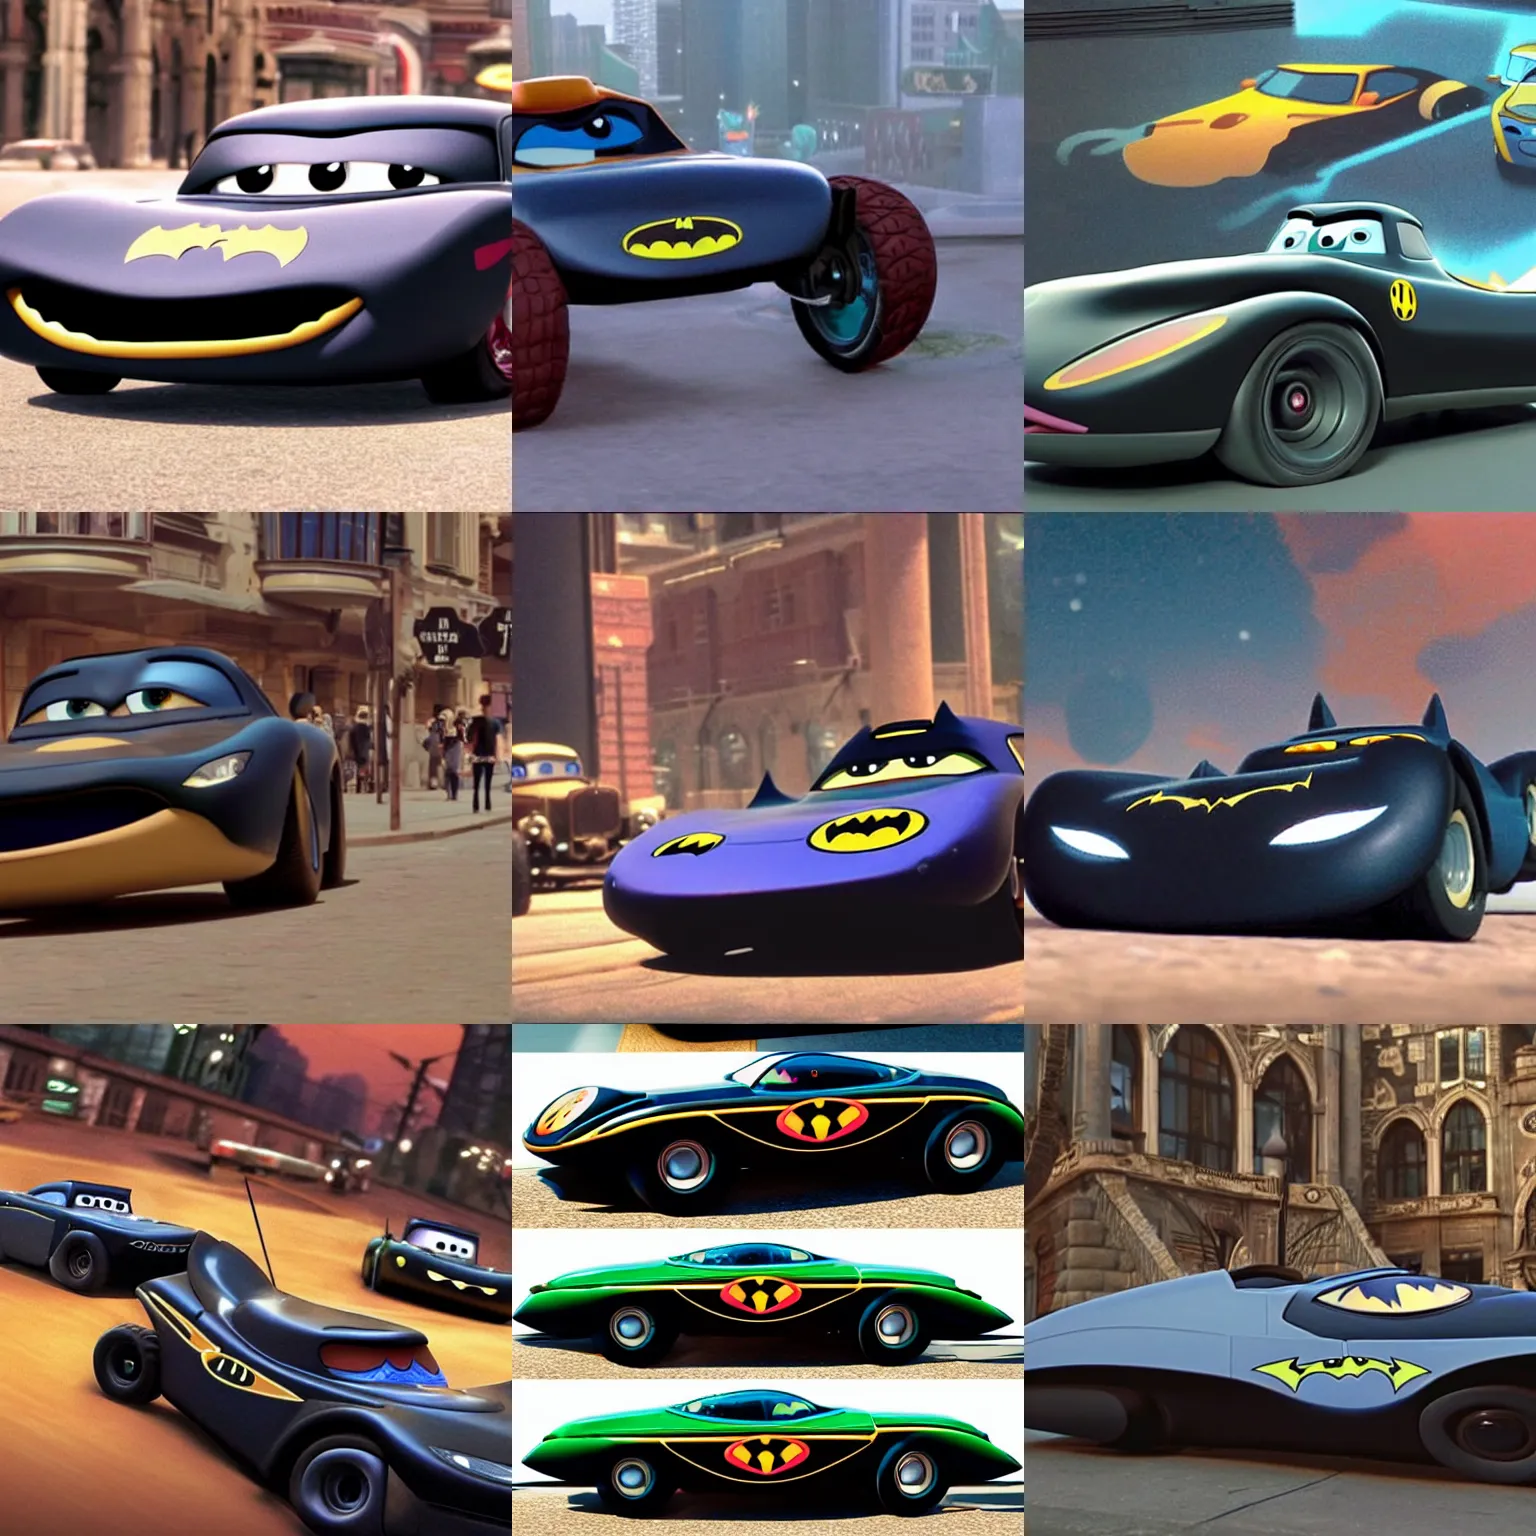 Prompt: Batmobile in pixar cars movie